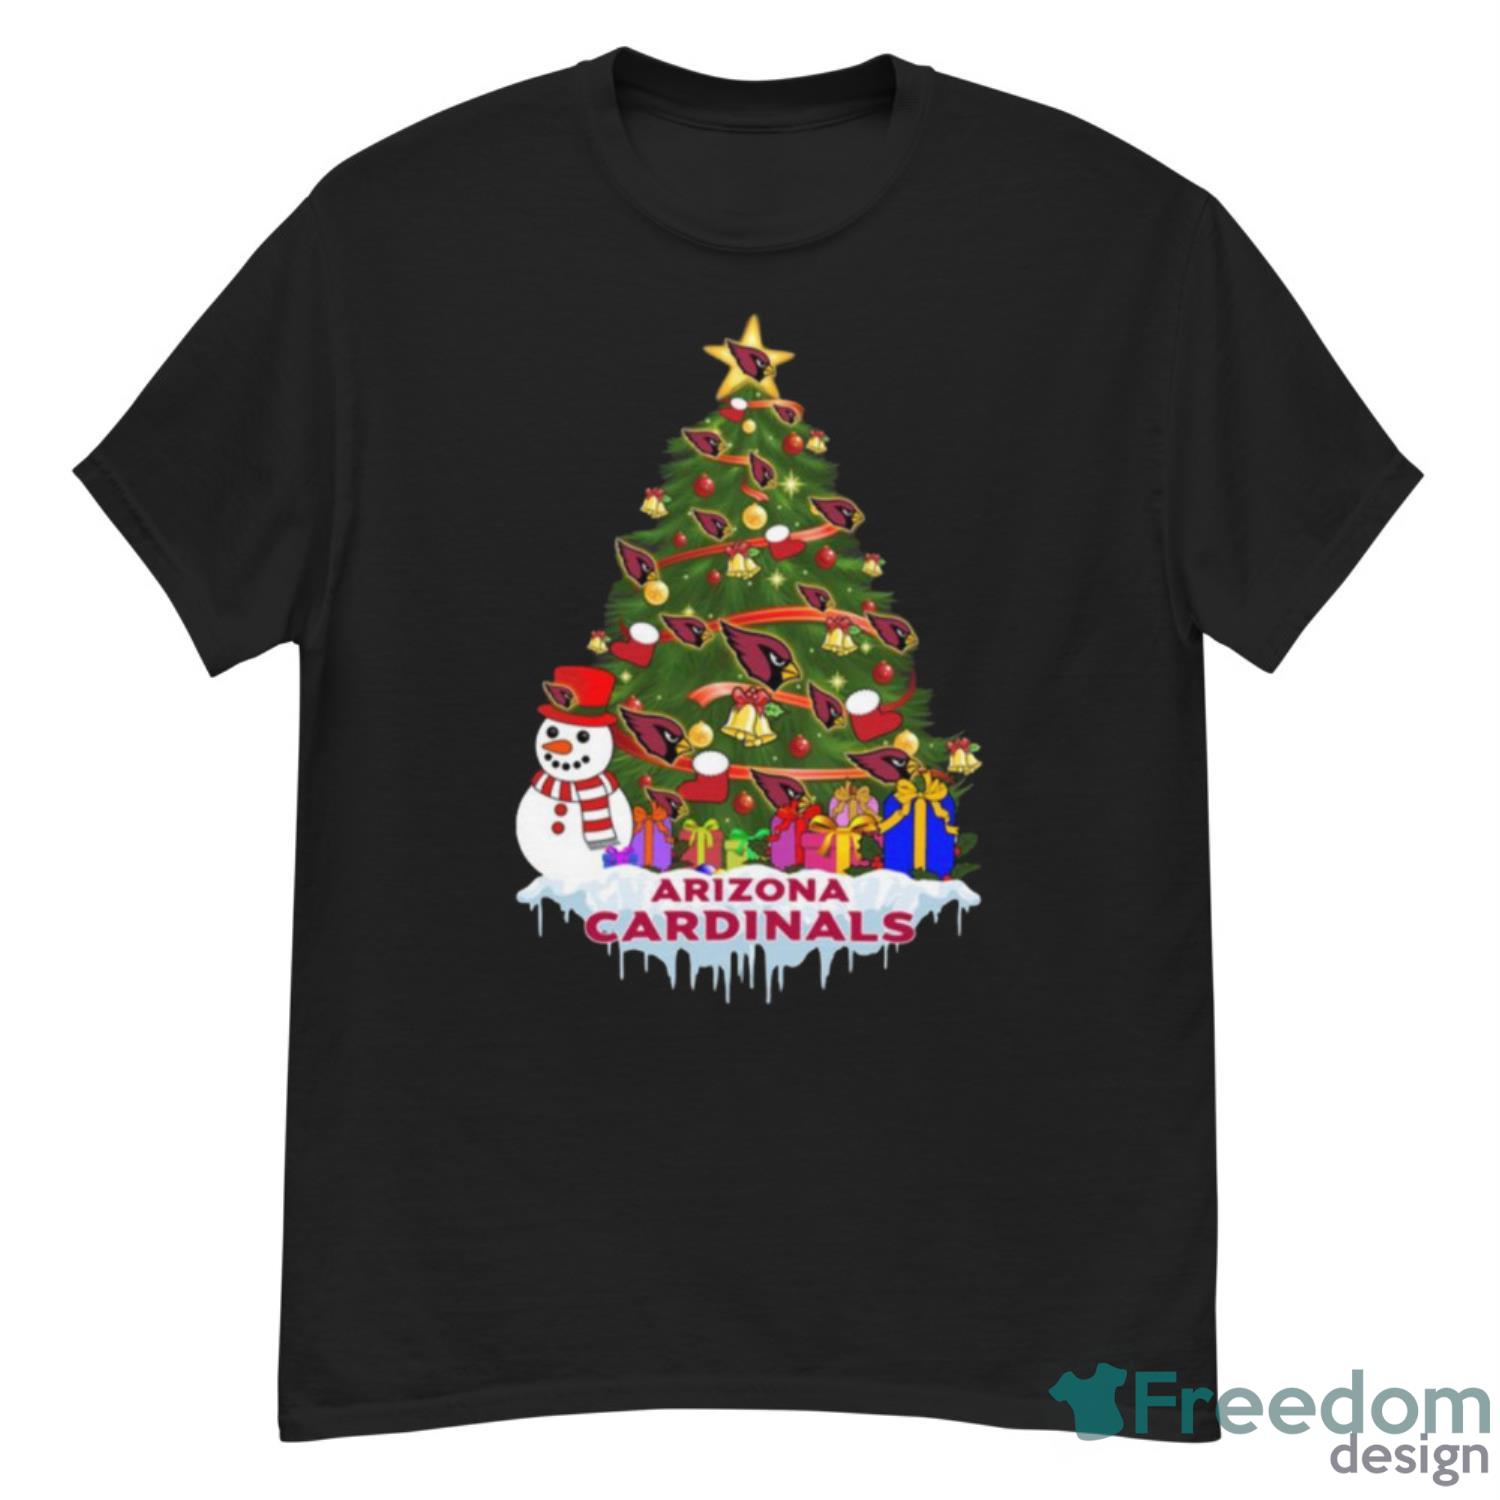 Arizona Cardinals Merry Christmas Nfl Football Sports Shirt - Freedomdesign